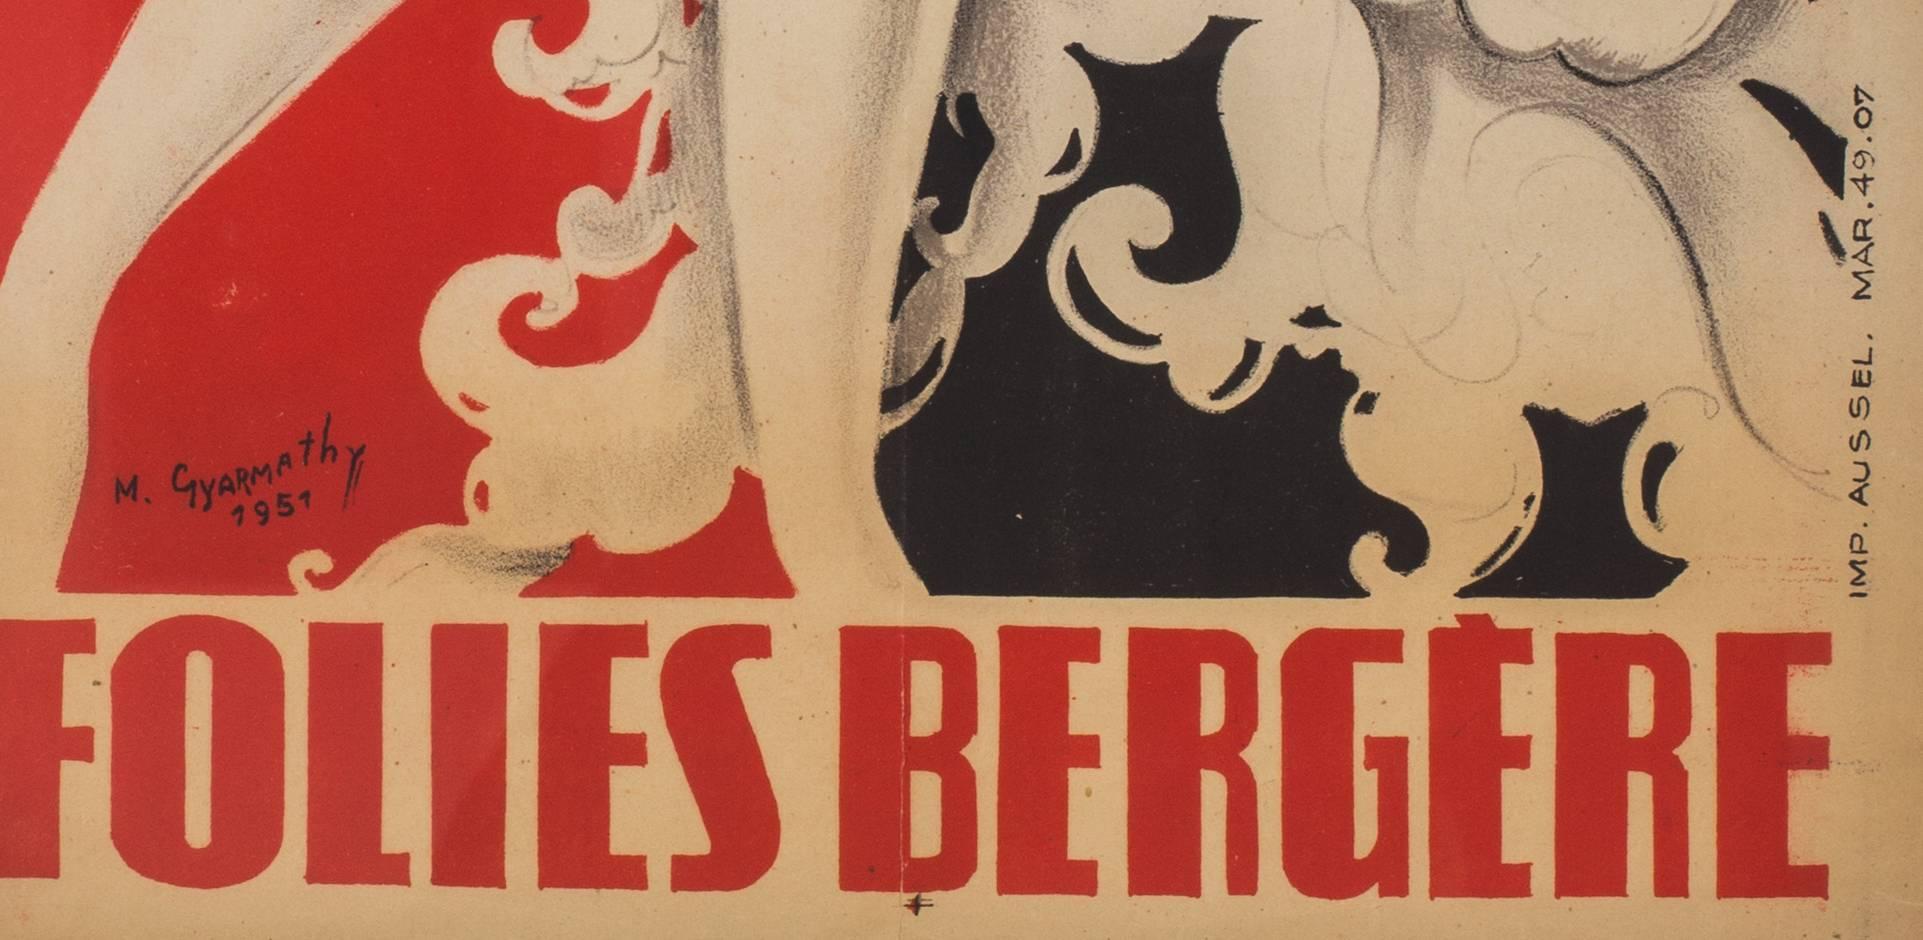 La Revue des Folies Bergere, signed by M. Gyarmathy (Miss Bluebell), 1951 - Beige Figurative Print by Unknown